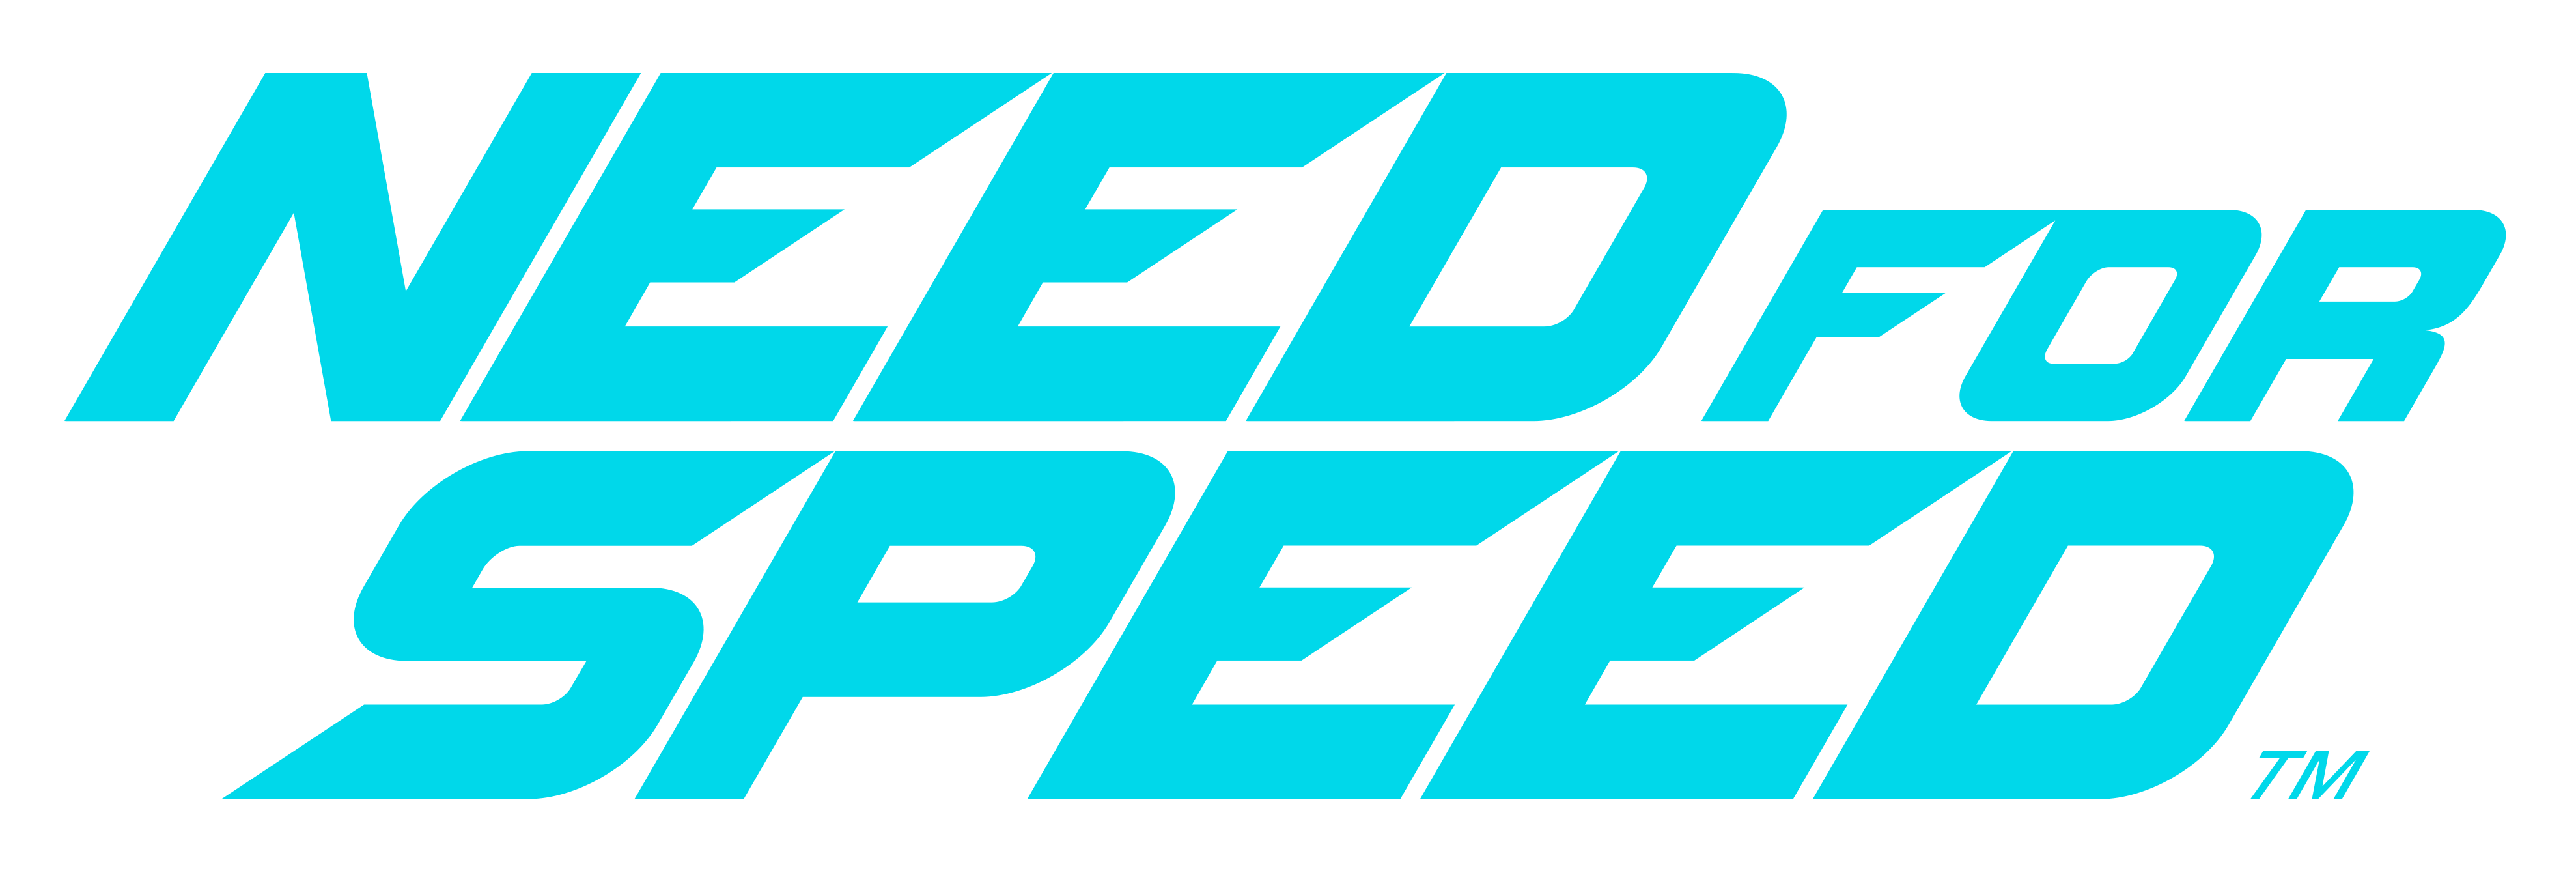 Need for Speed ​​Logo PNG Immagine di alta qualità